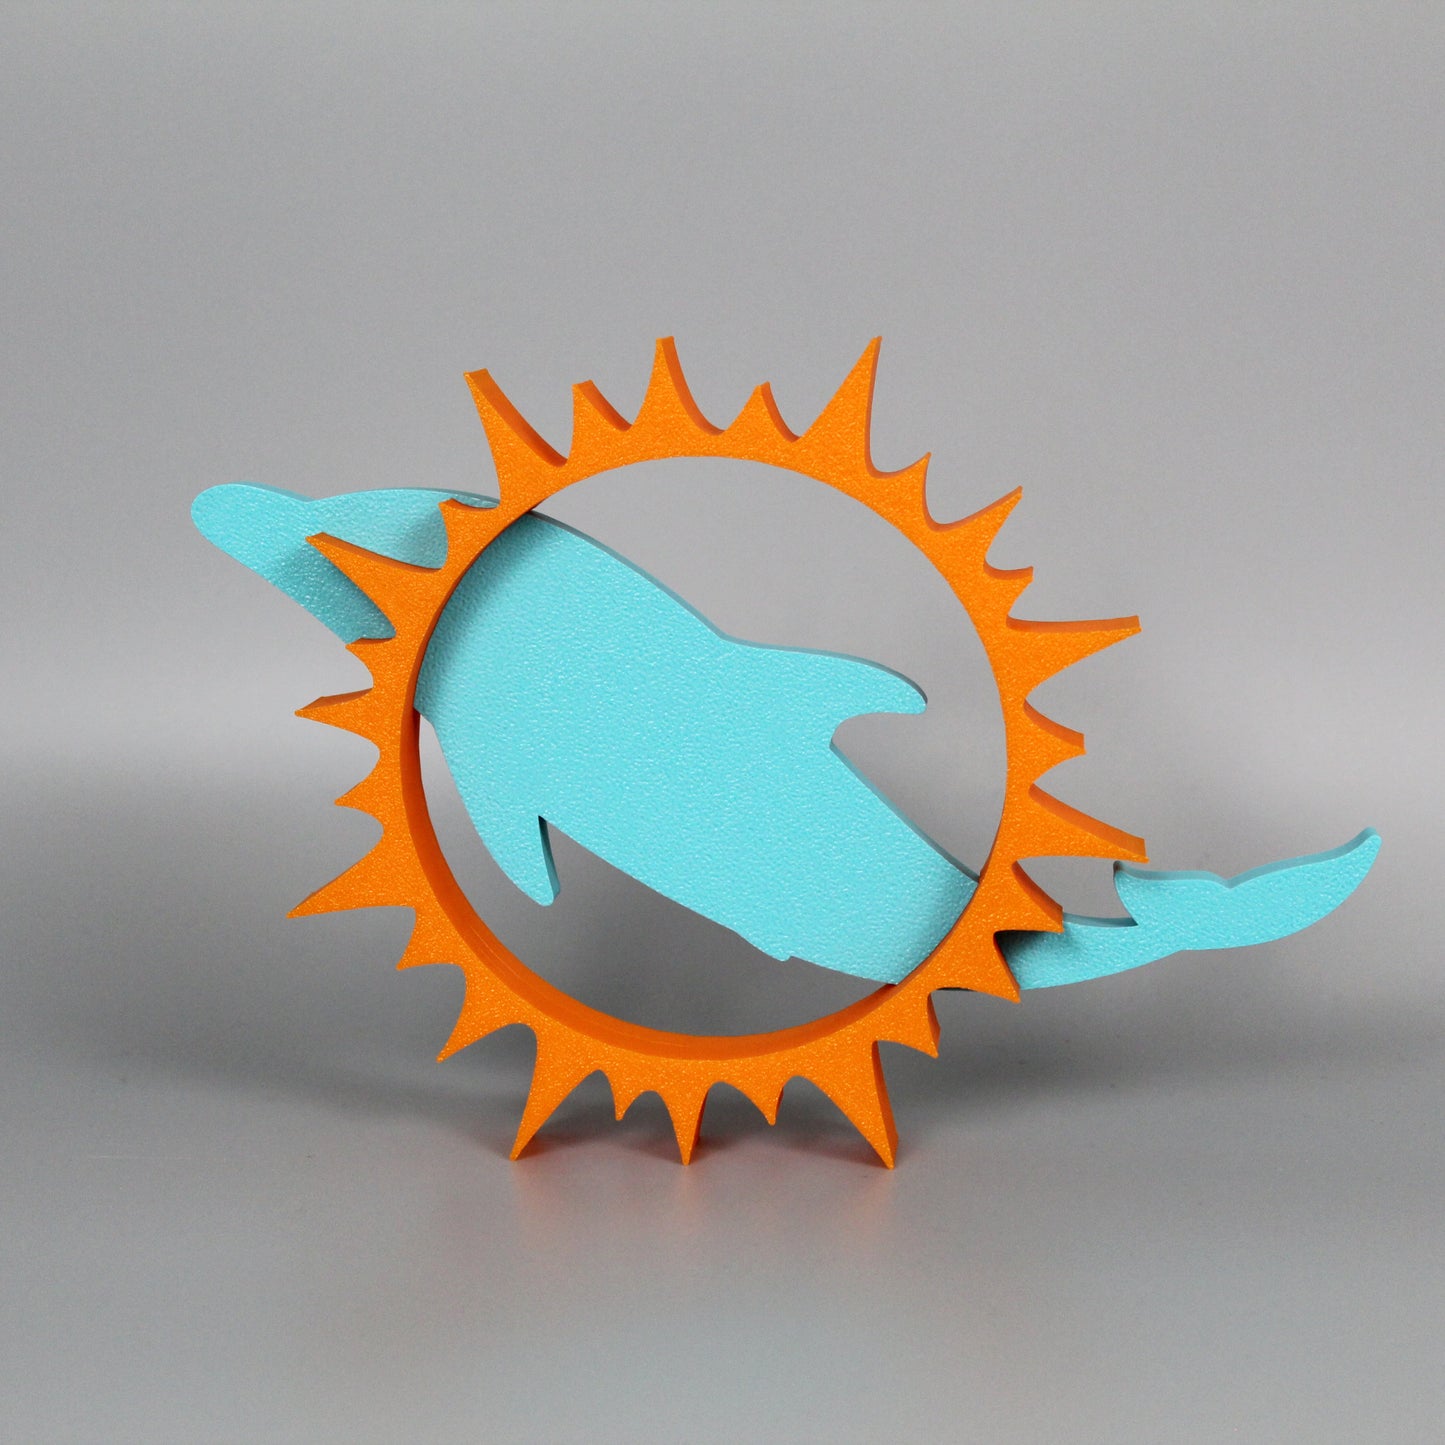 Miami Dolphins 3D Printed Decor